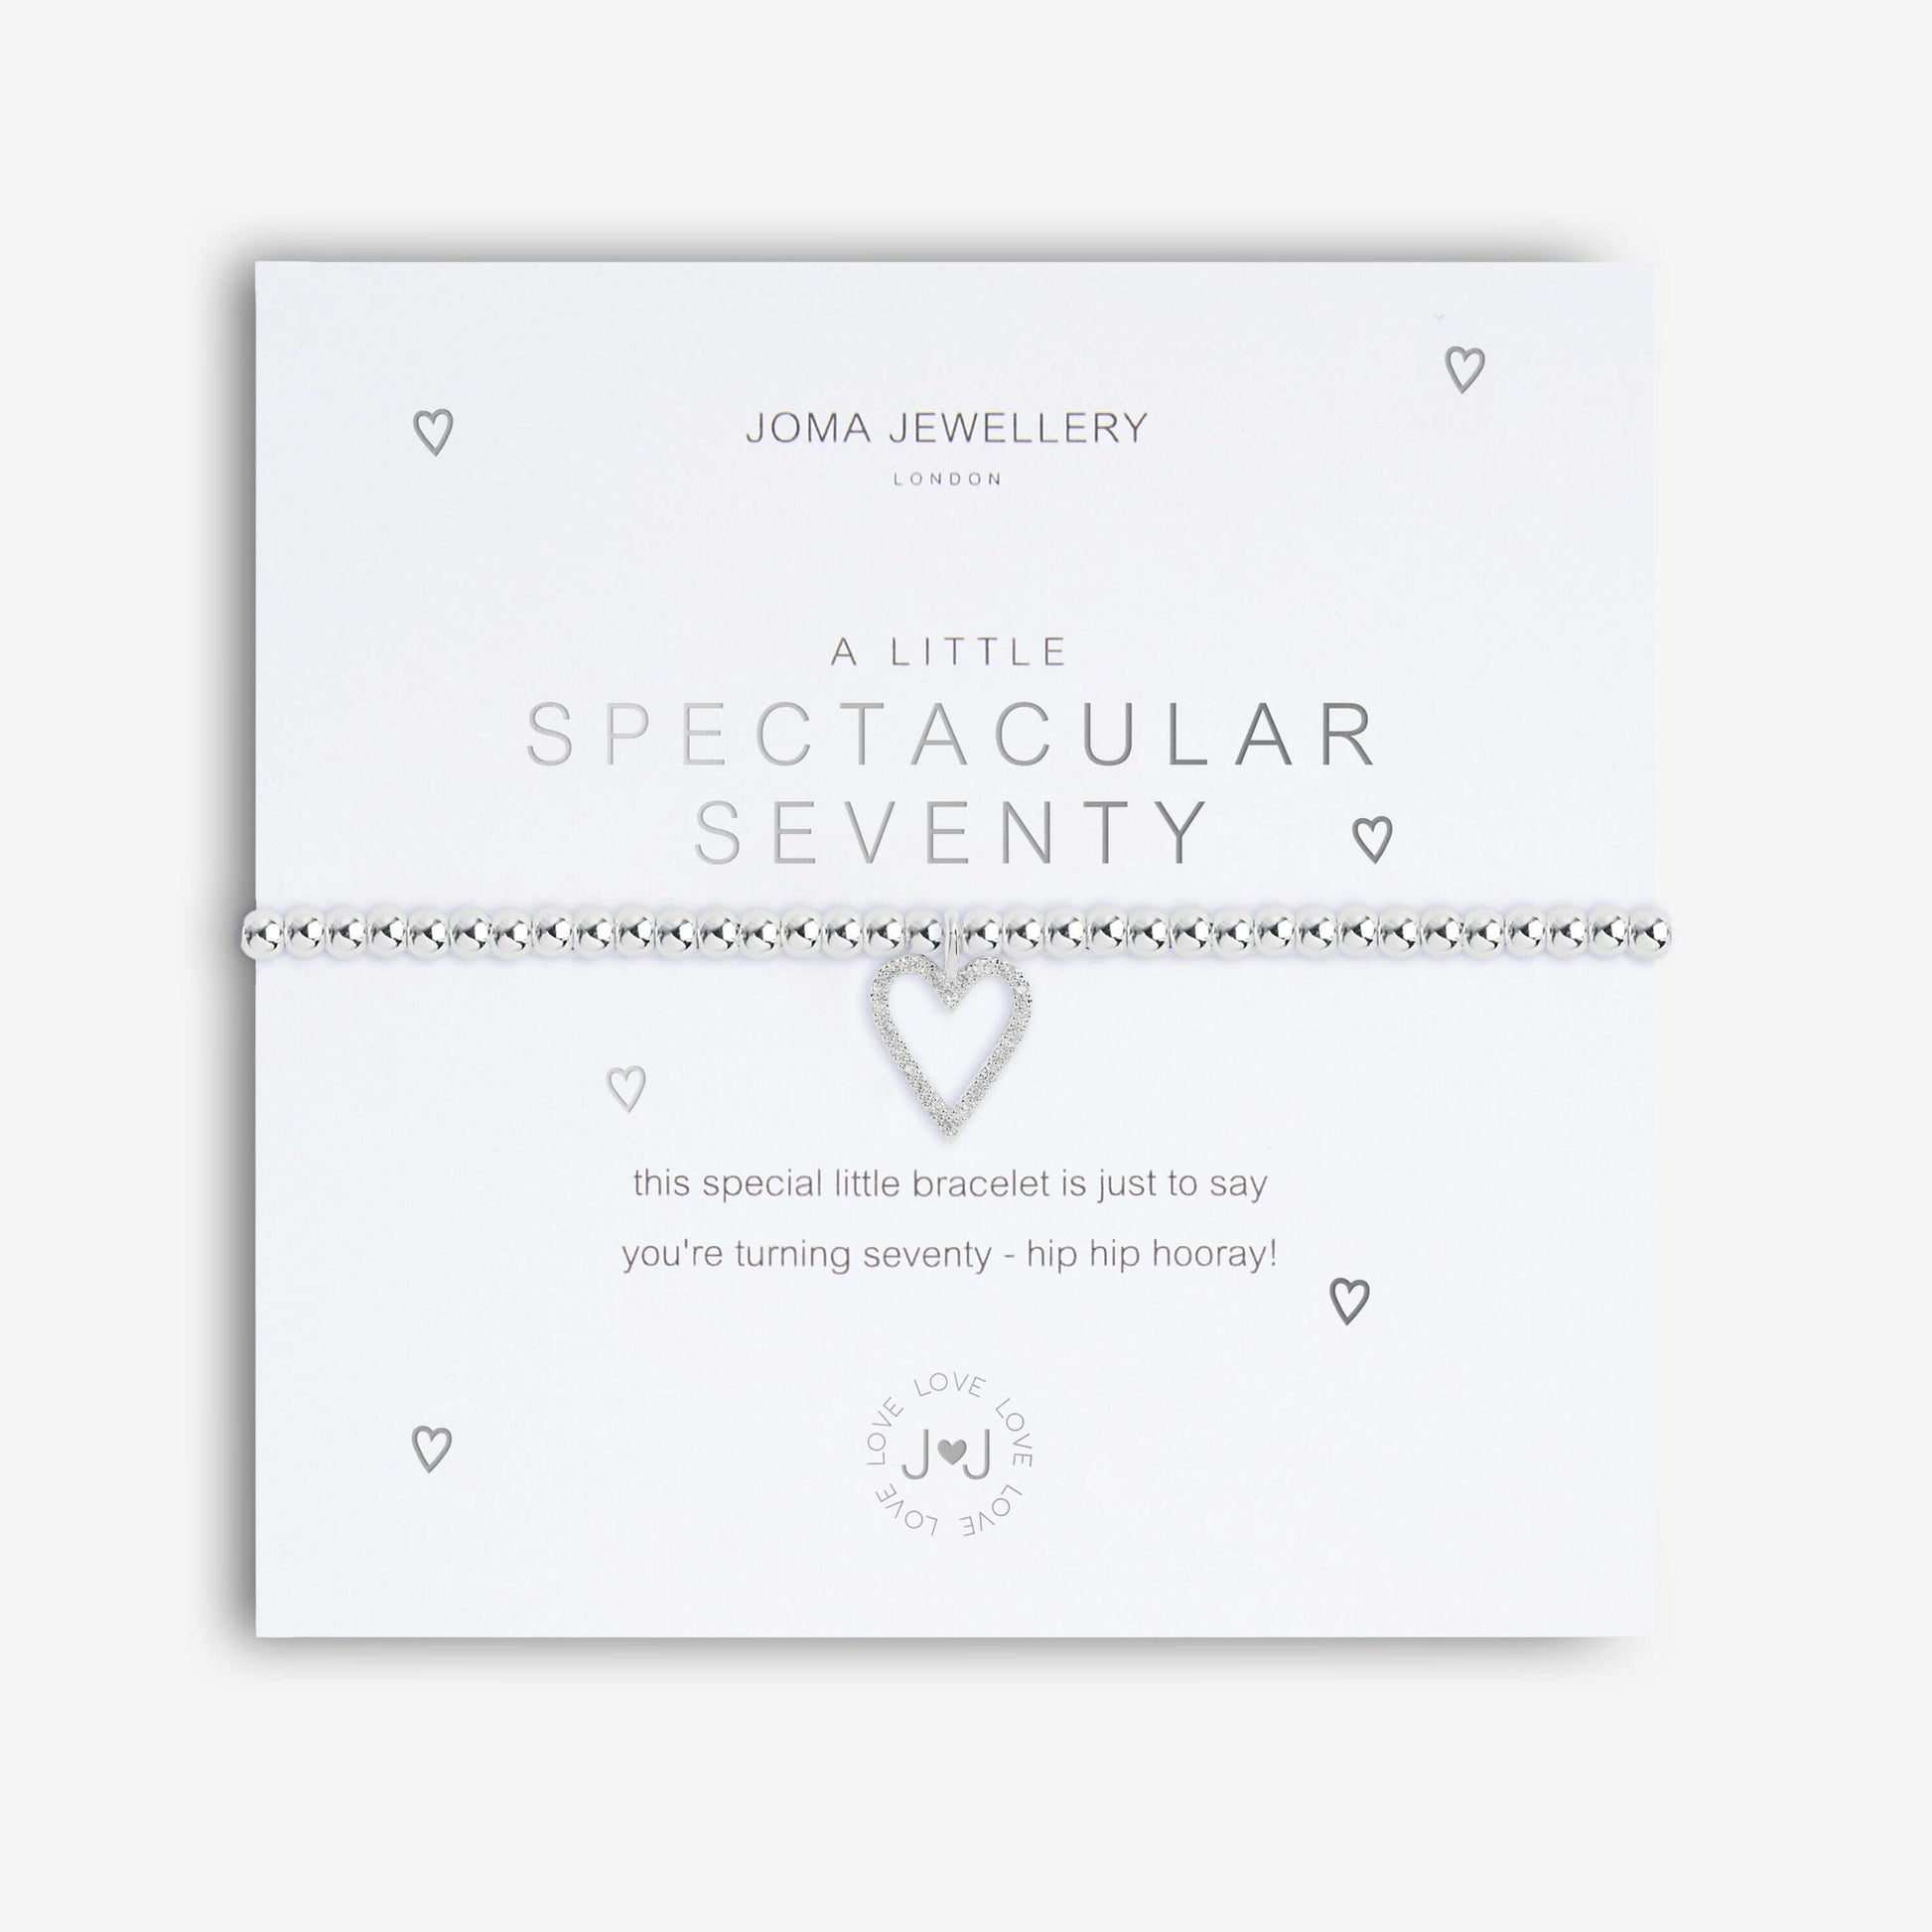 Joma Jewellery 'A Little Spectacular Seventy' Bracelet